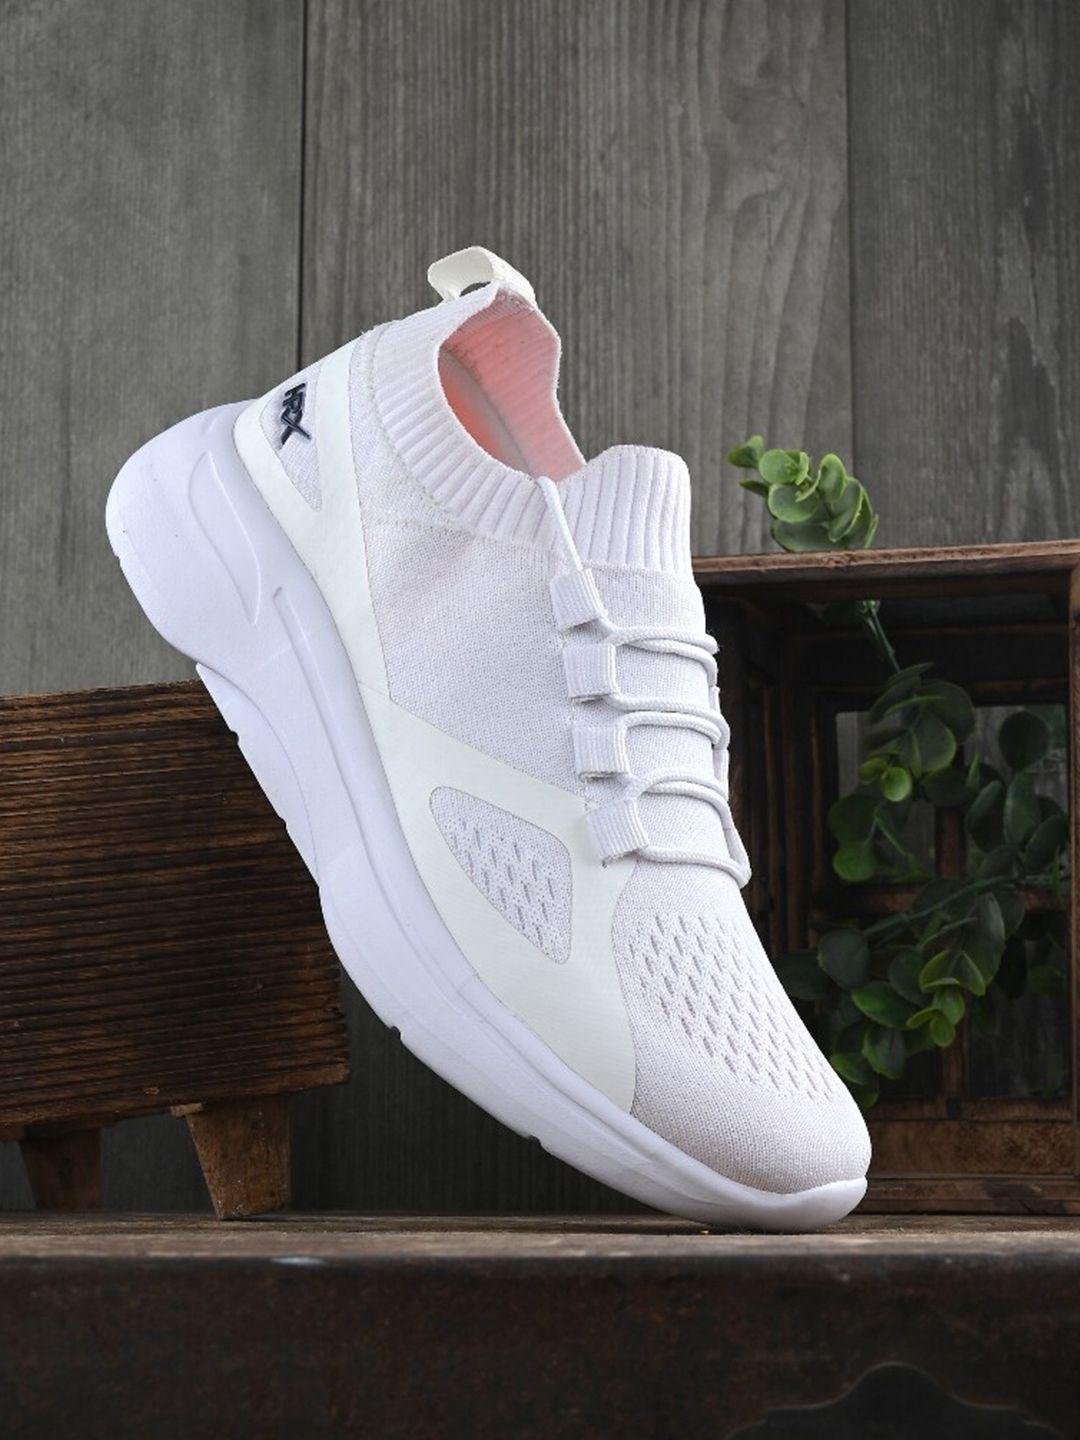 hrx by hrithik roshan men white non-marking fresh foam walking sports shoes